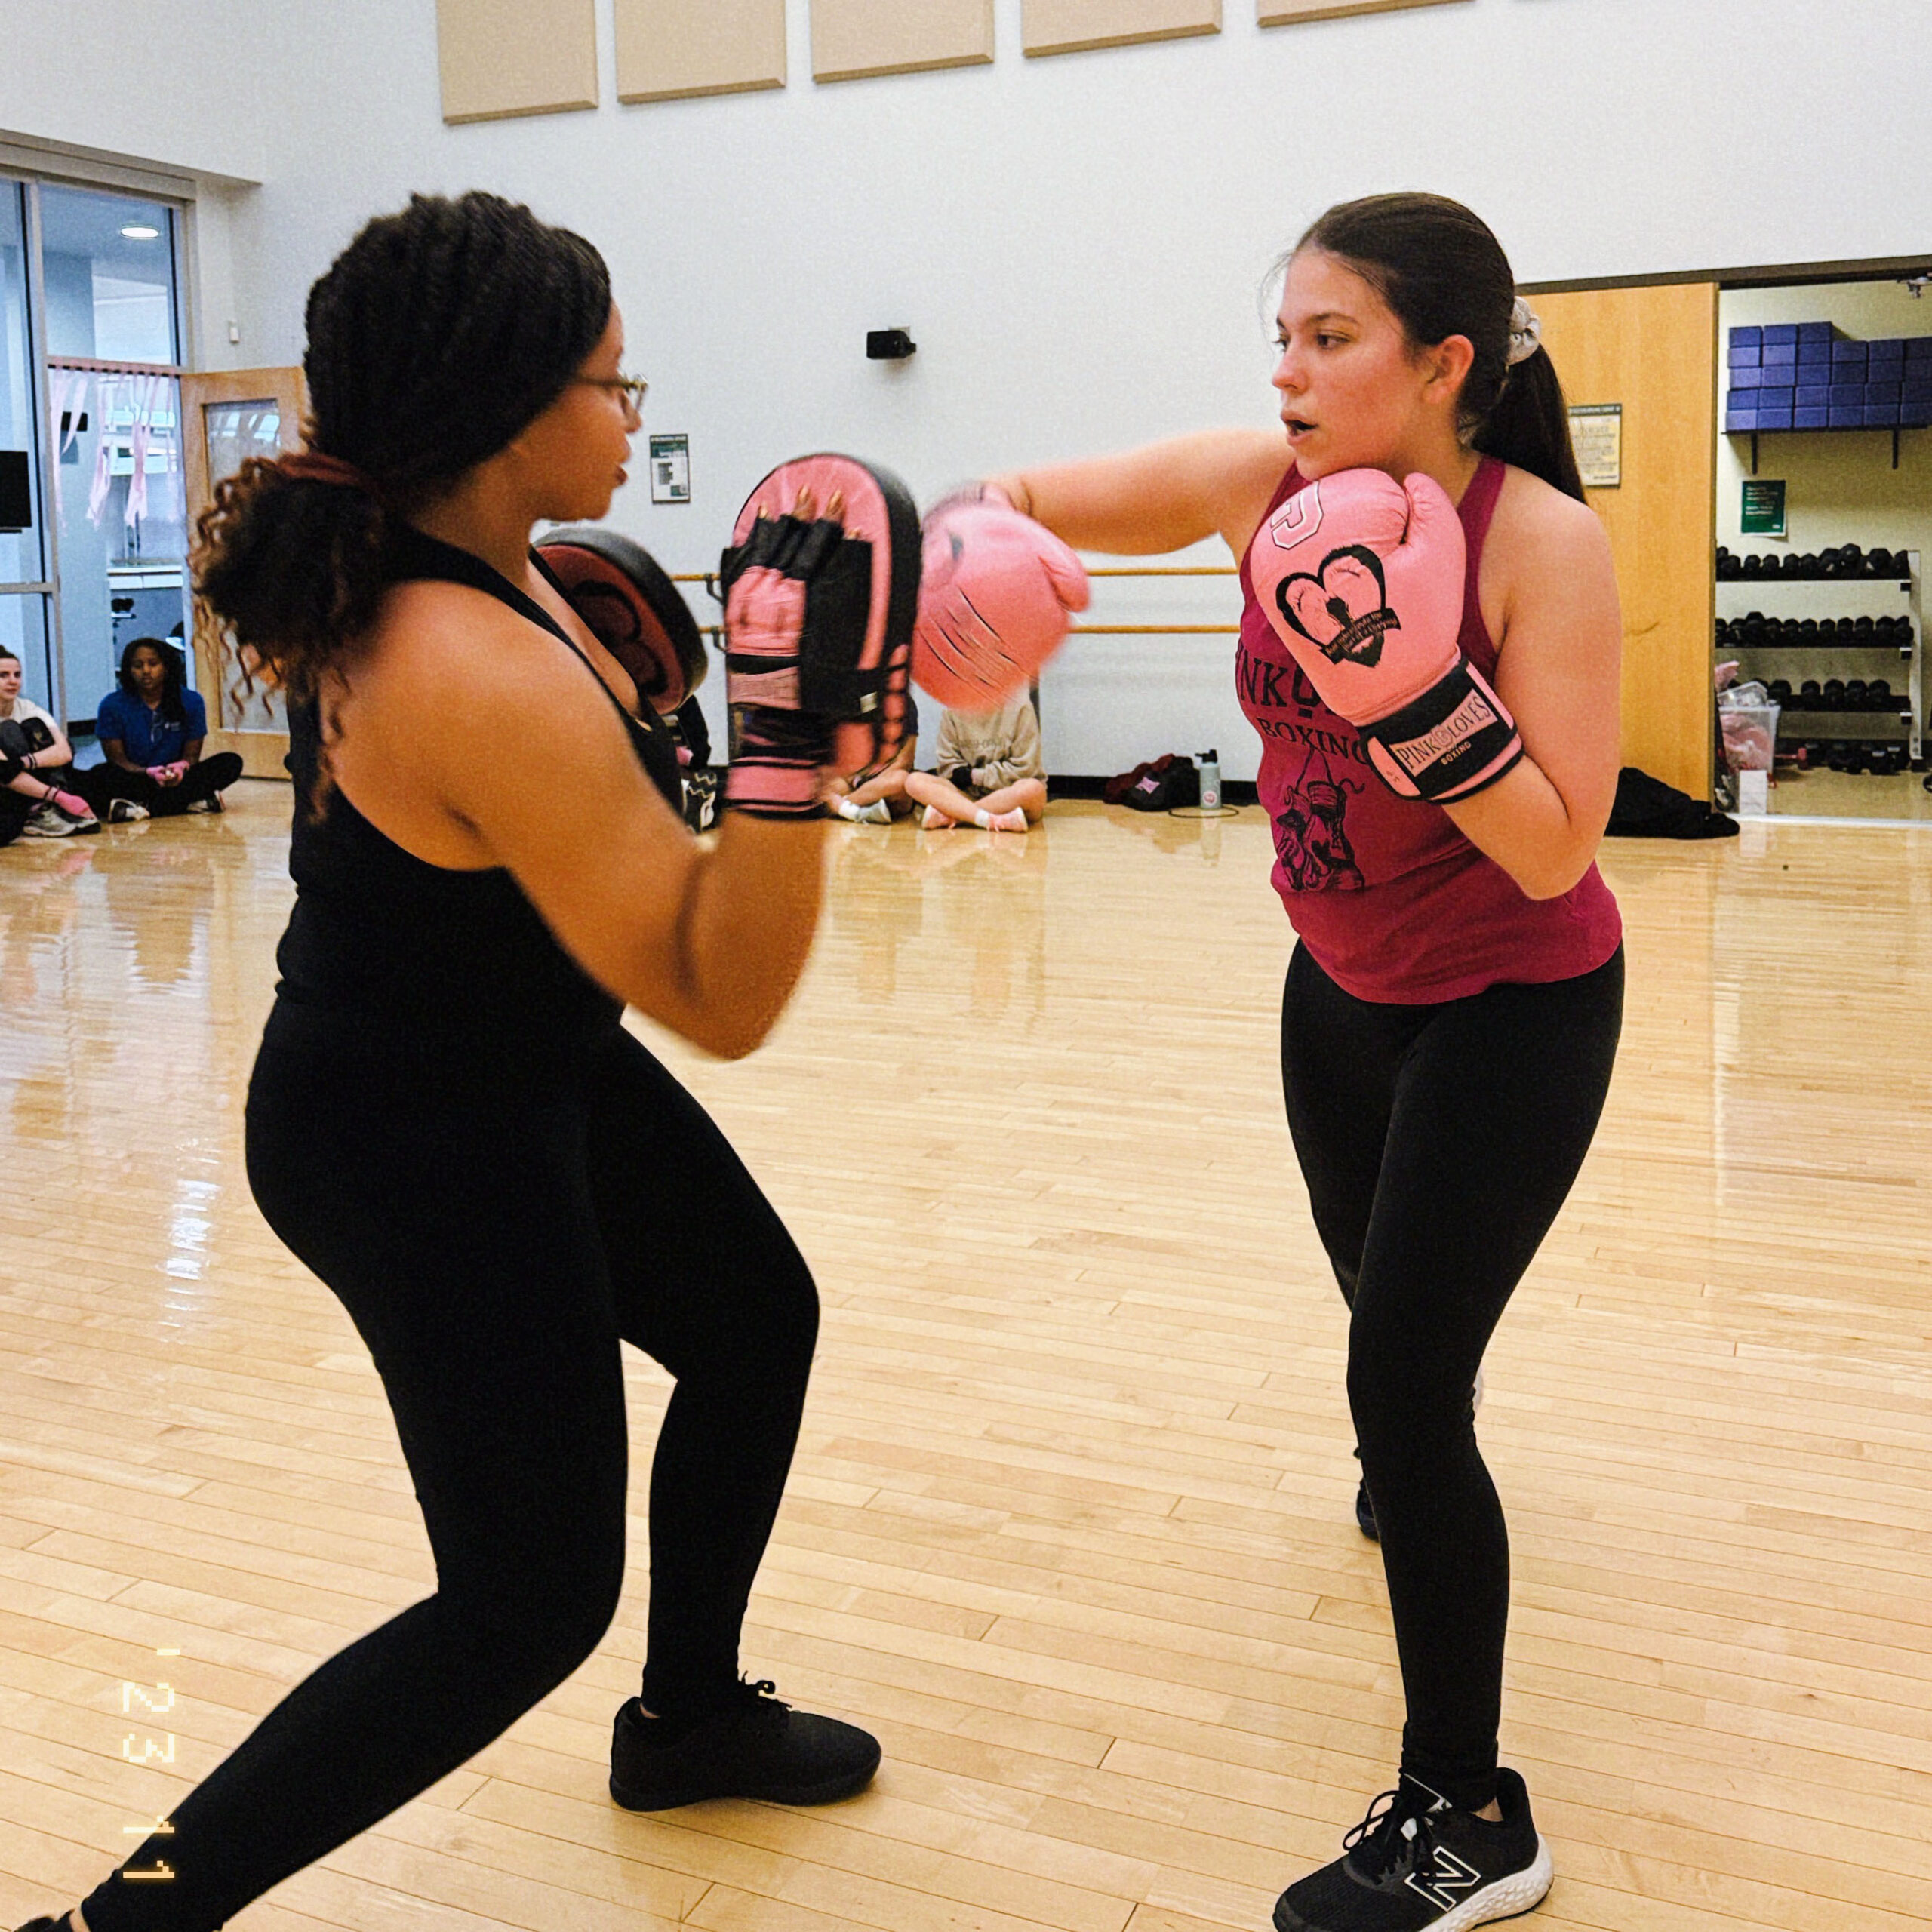 Two girls boxing.